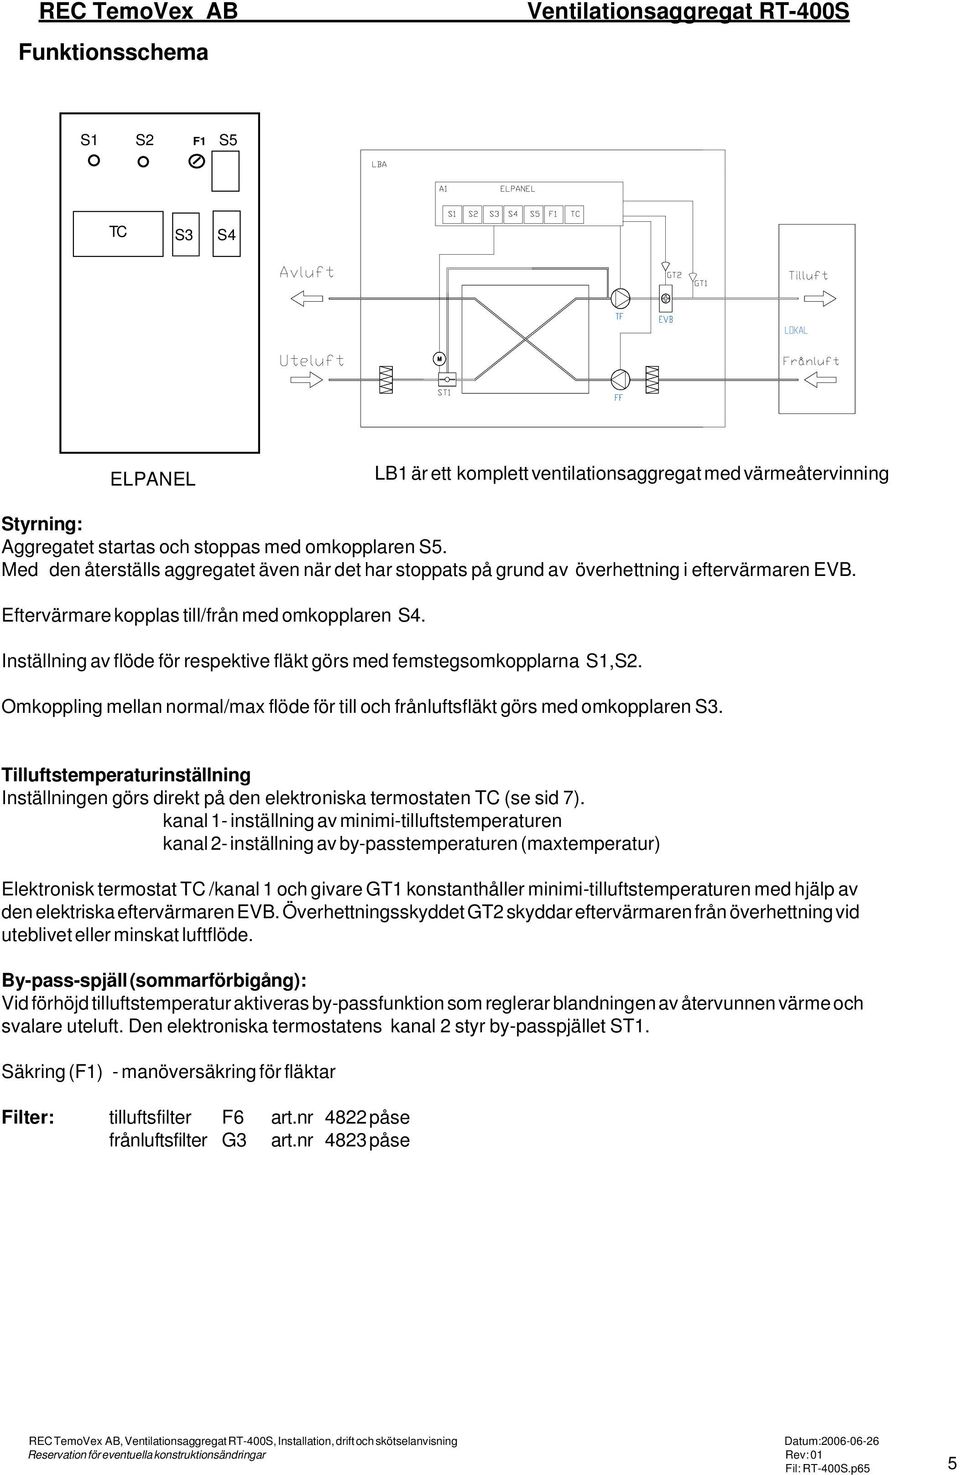 Lättskött! REC TemoVex AB, Kanongatan 159, Helsingborg - PDF Free Download